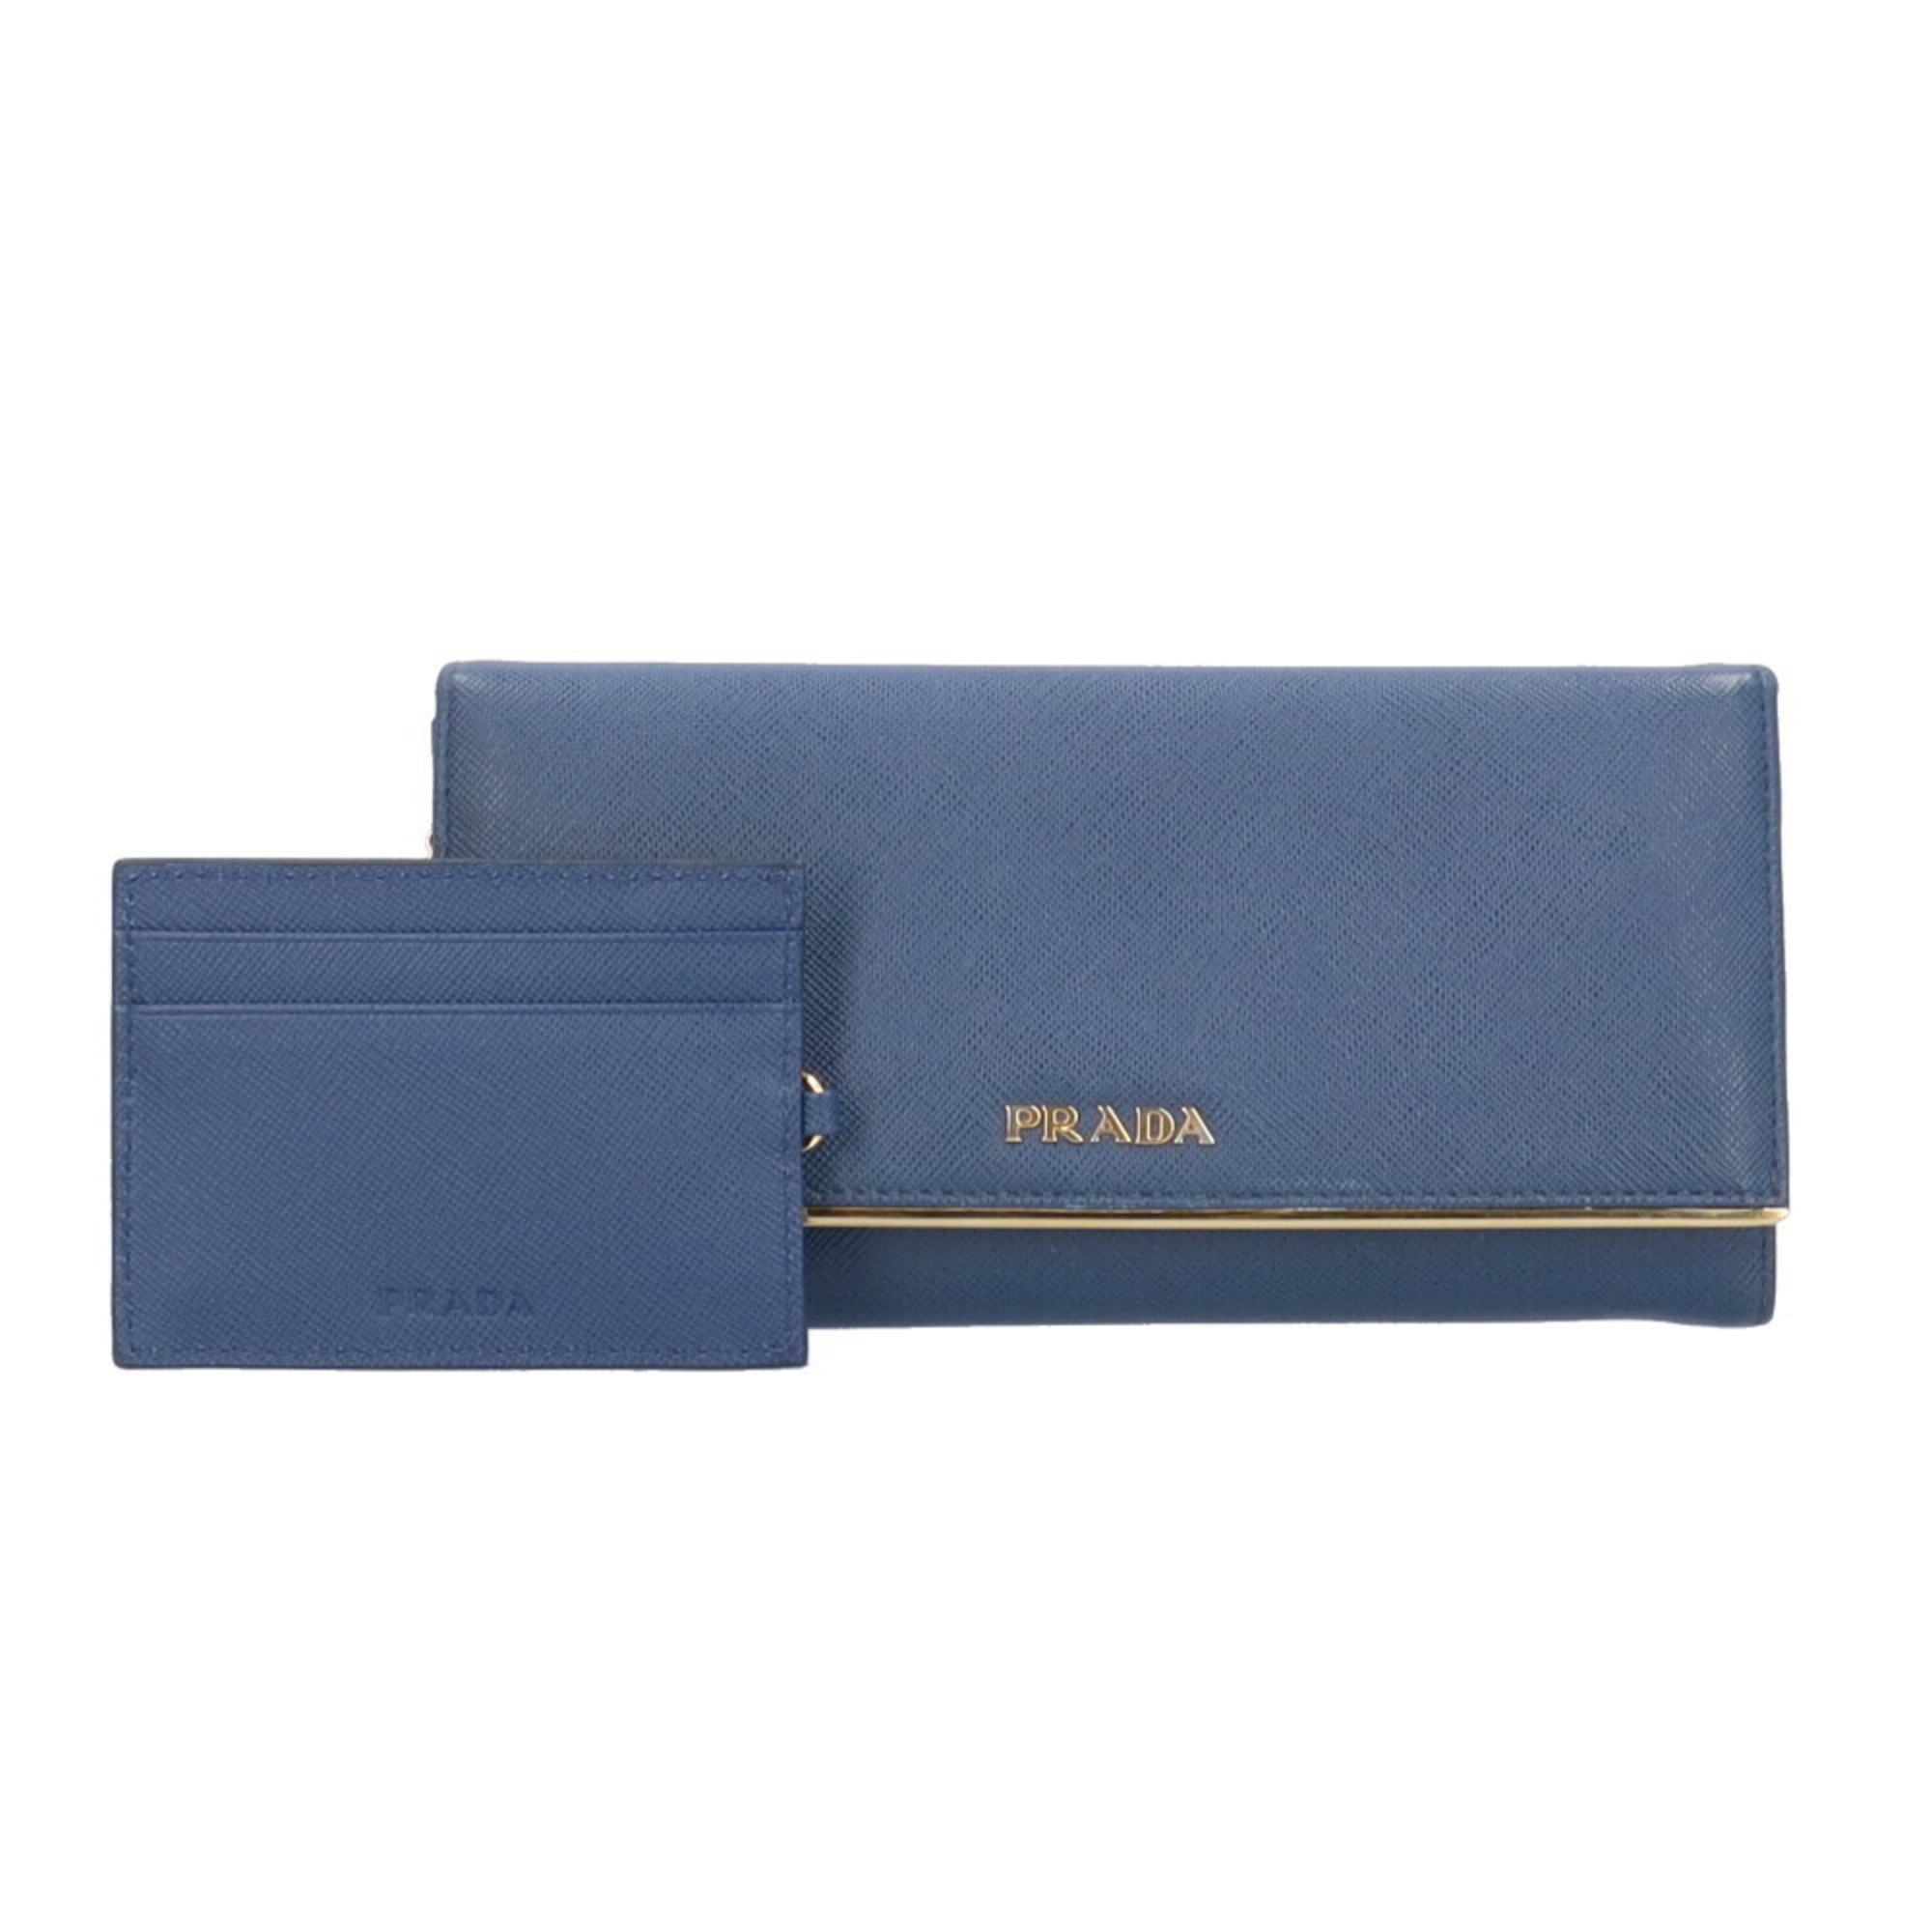 Prada Saffiano Long Wallet Leather 1M1132 Women's PRADA BRB10000000120767